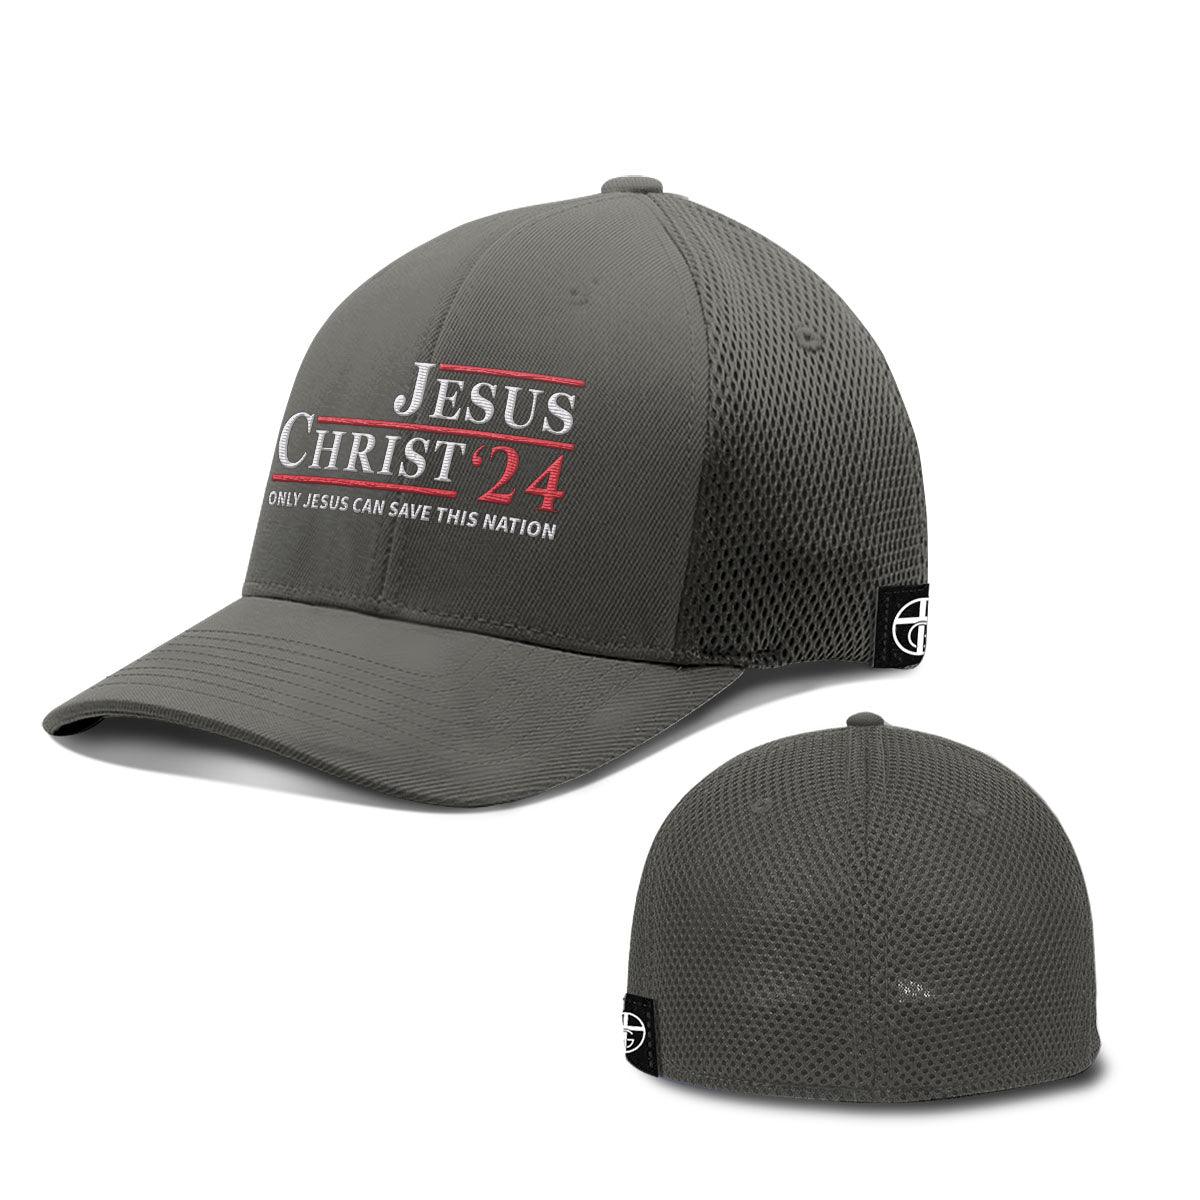 Jesus Christ'24 Hats